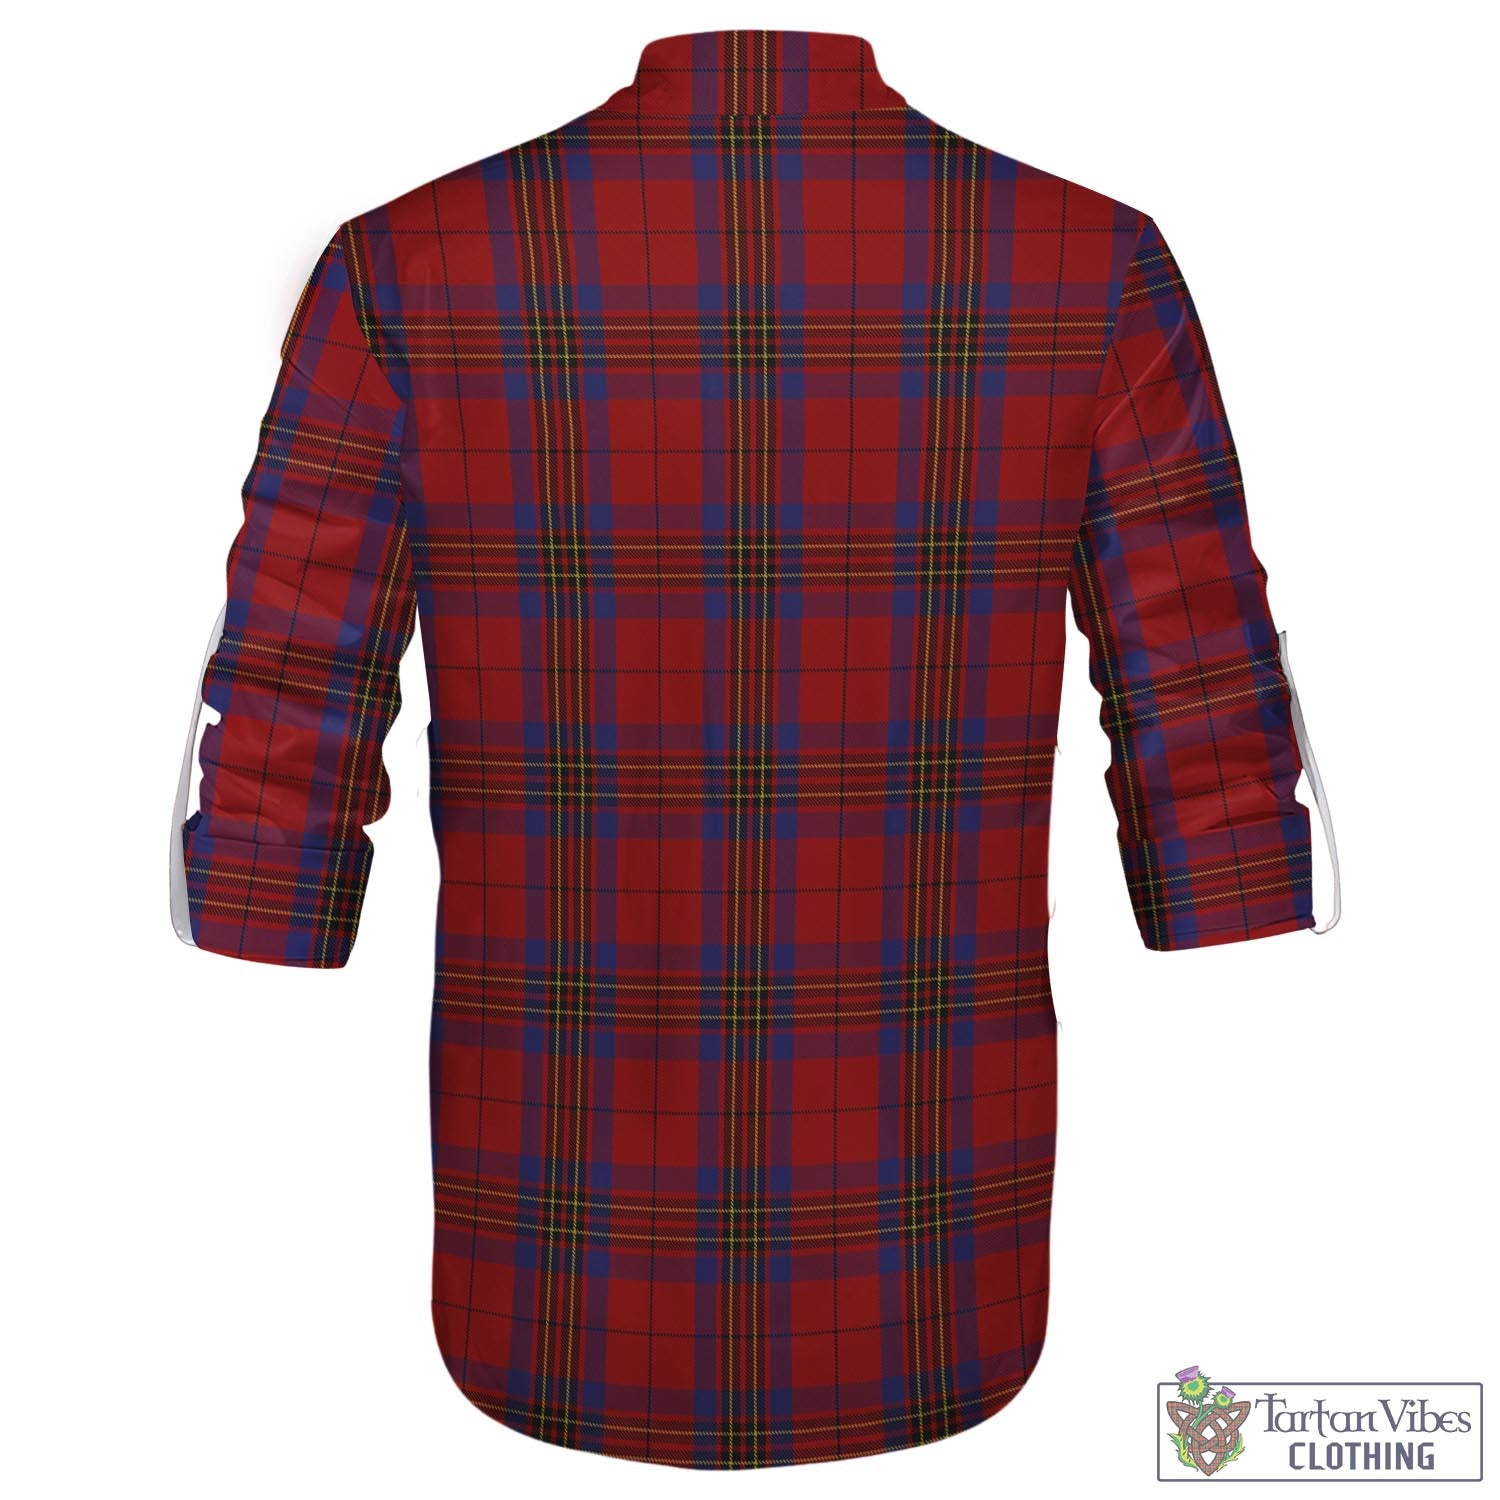 Tartan Vibes Clothing Leslie Red Tartan Men's Scottish Traditional Jacobite Ghillie Kilt Shirt with Family Crest